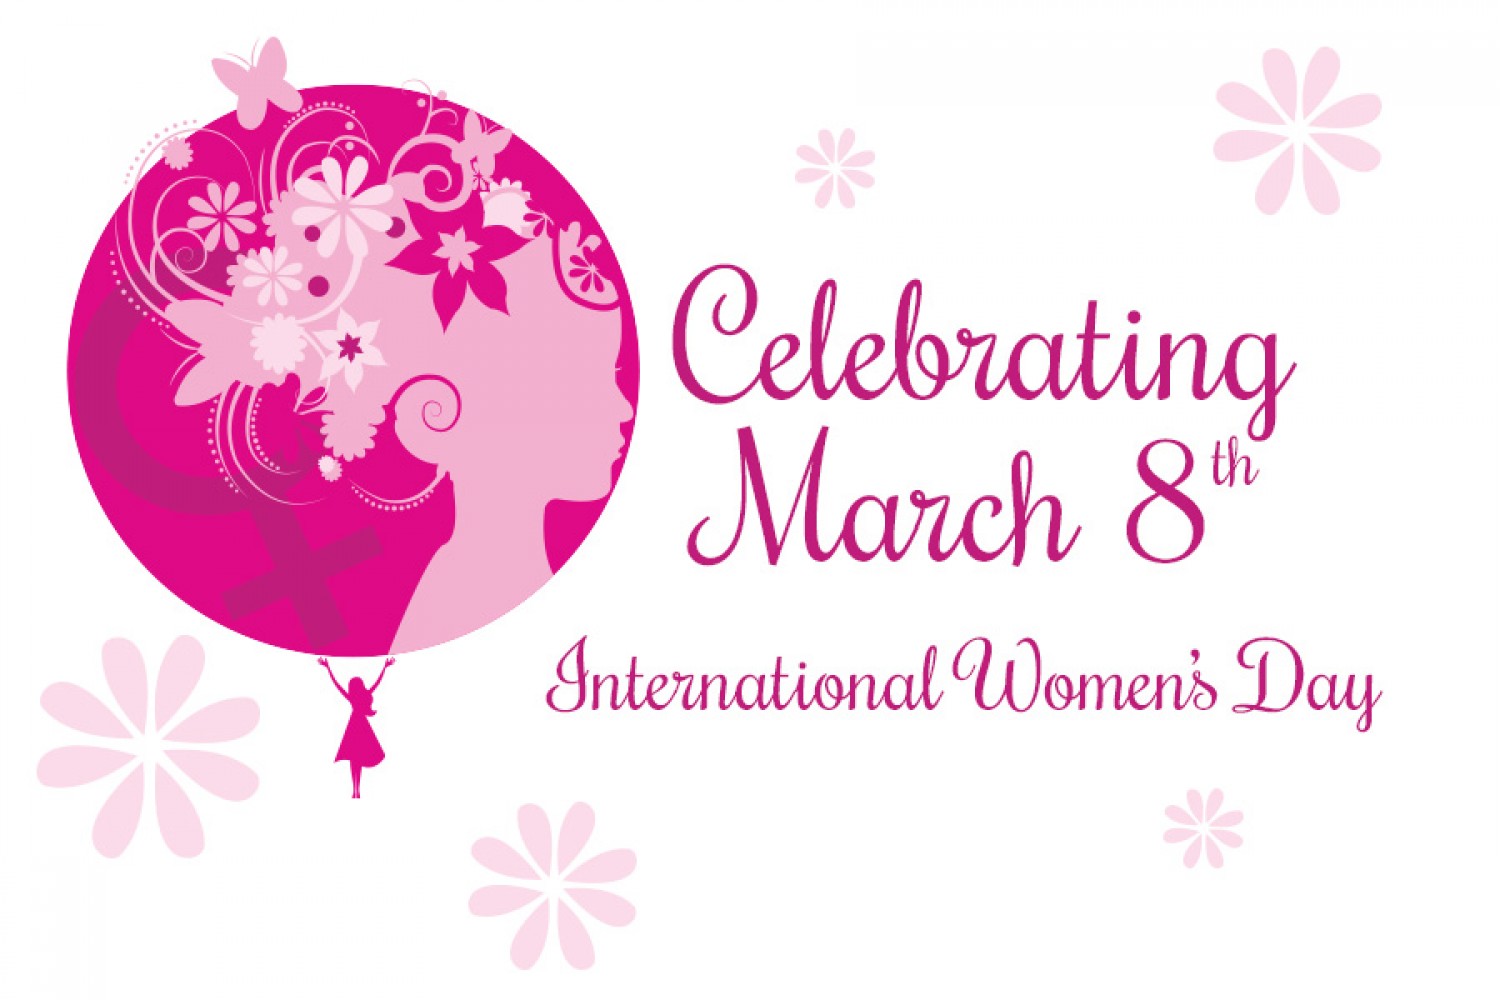 International Women's Day Services